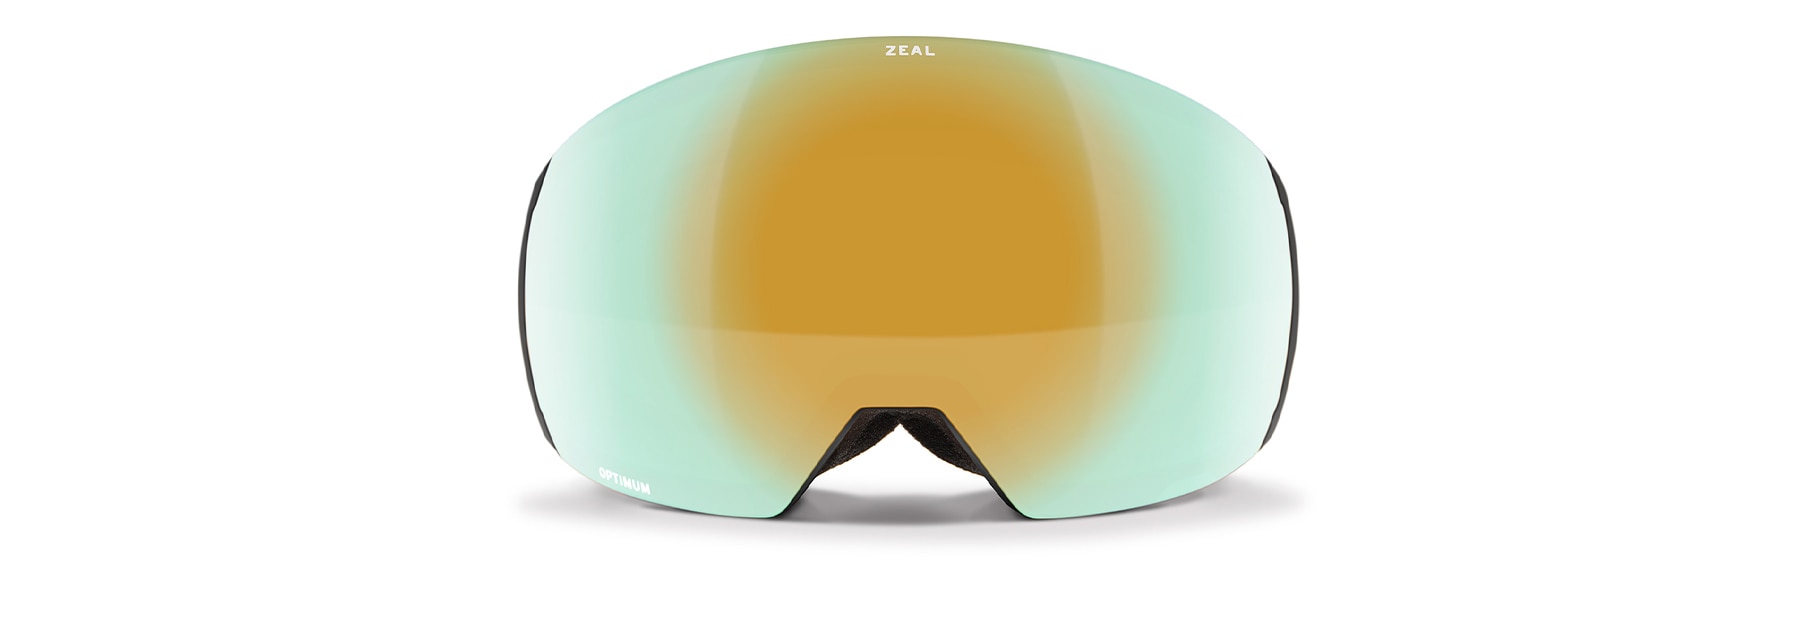 Shop PORTAL XL (Z1611) Goggles by Zeal | Zeal Optics